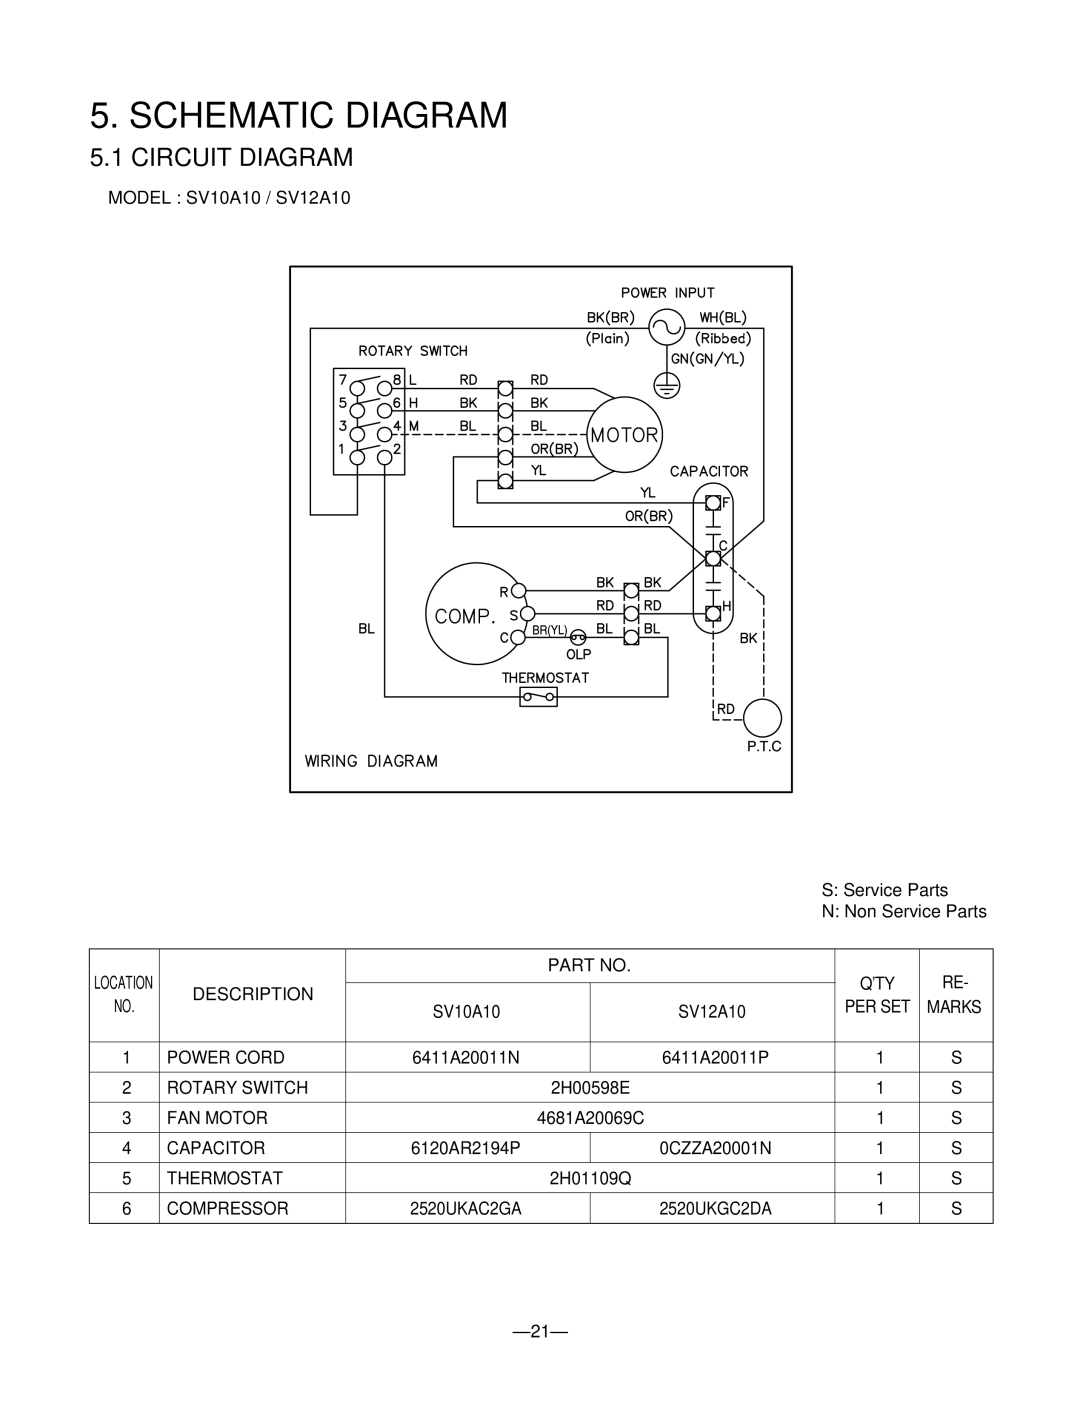 Friedrich SV12A10, SV10A10, SV08A10 manual Schematic Diagram, Circuit Diagram, QTY Description, Per Set 